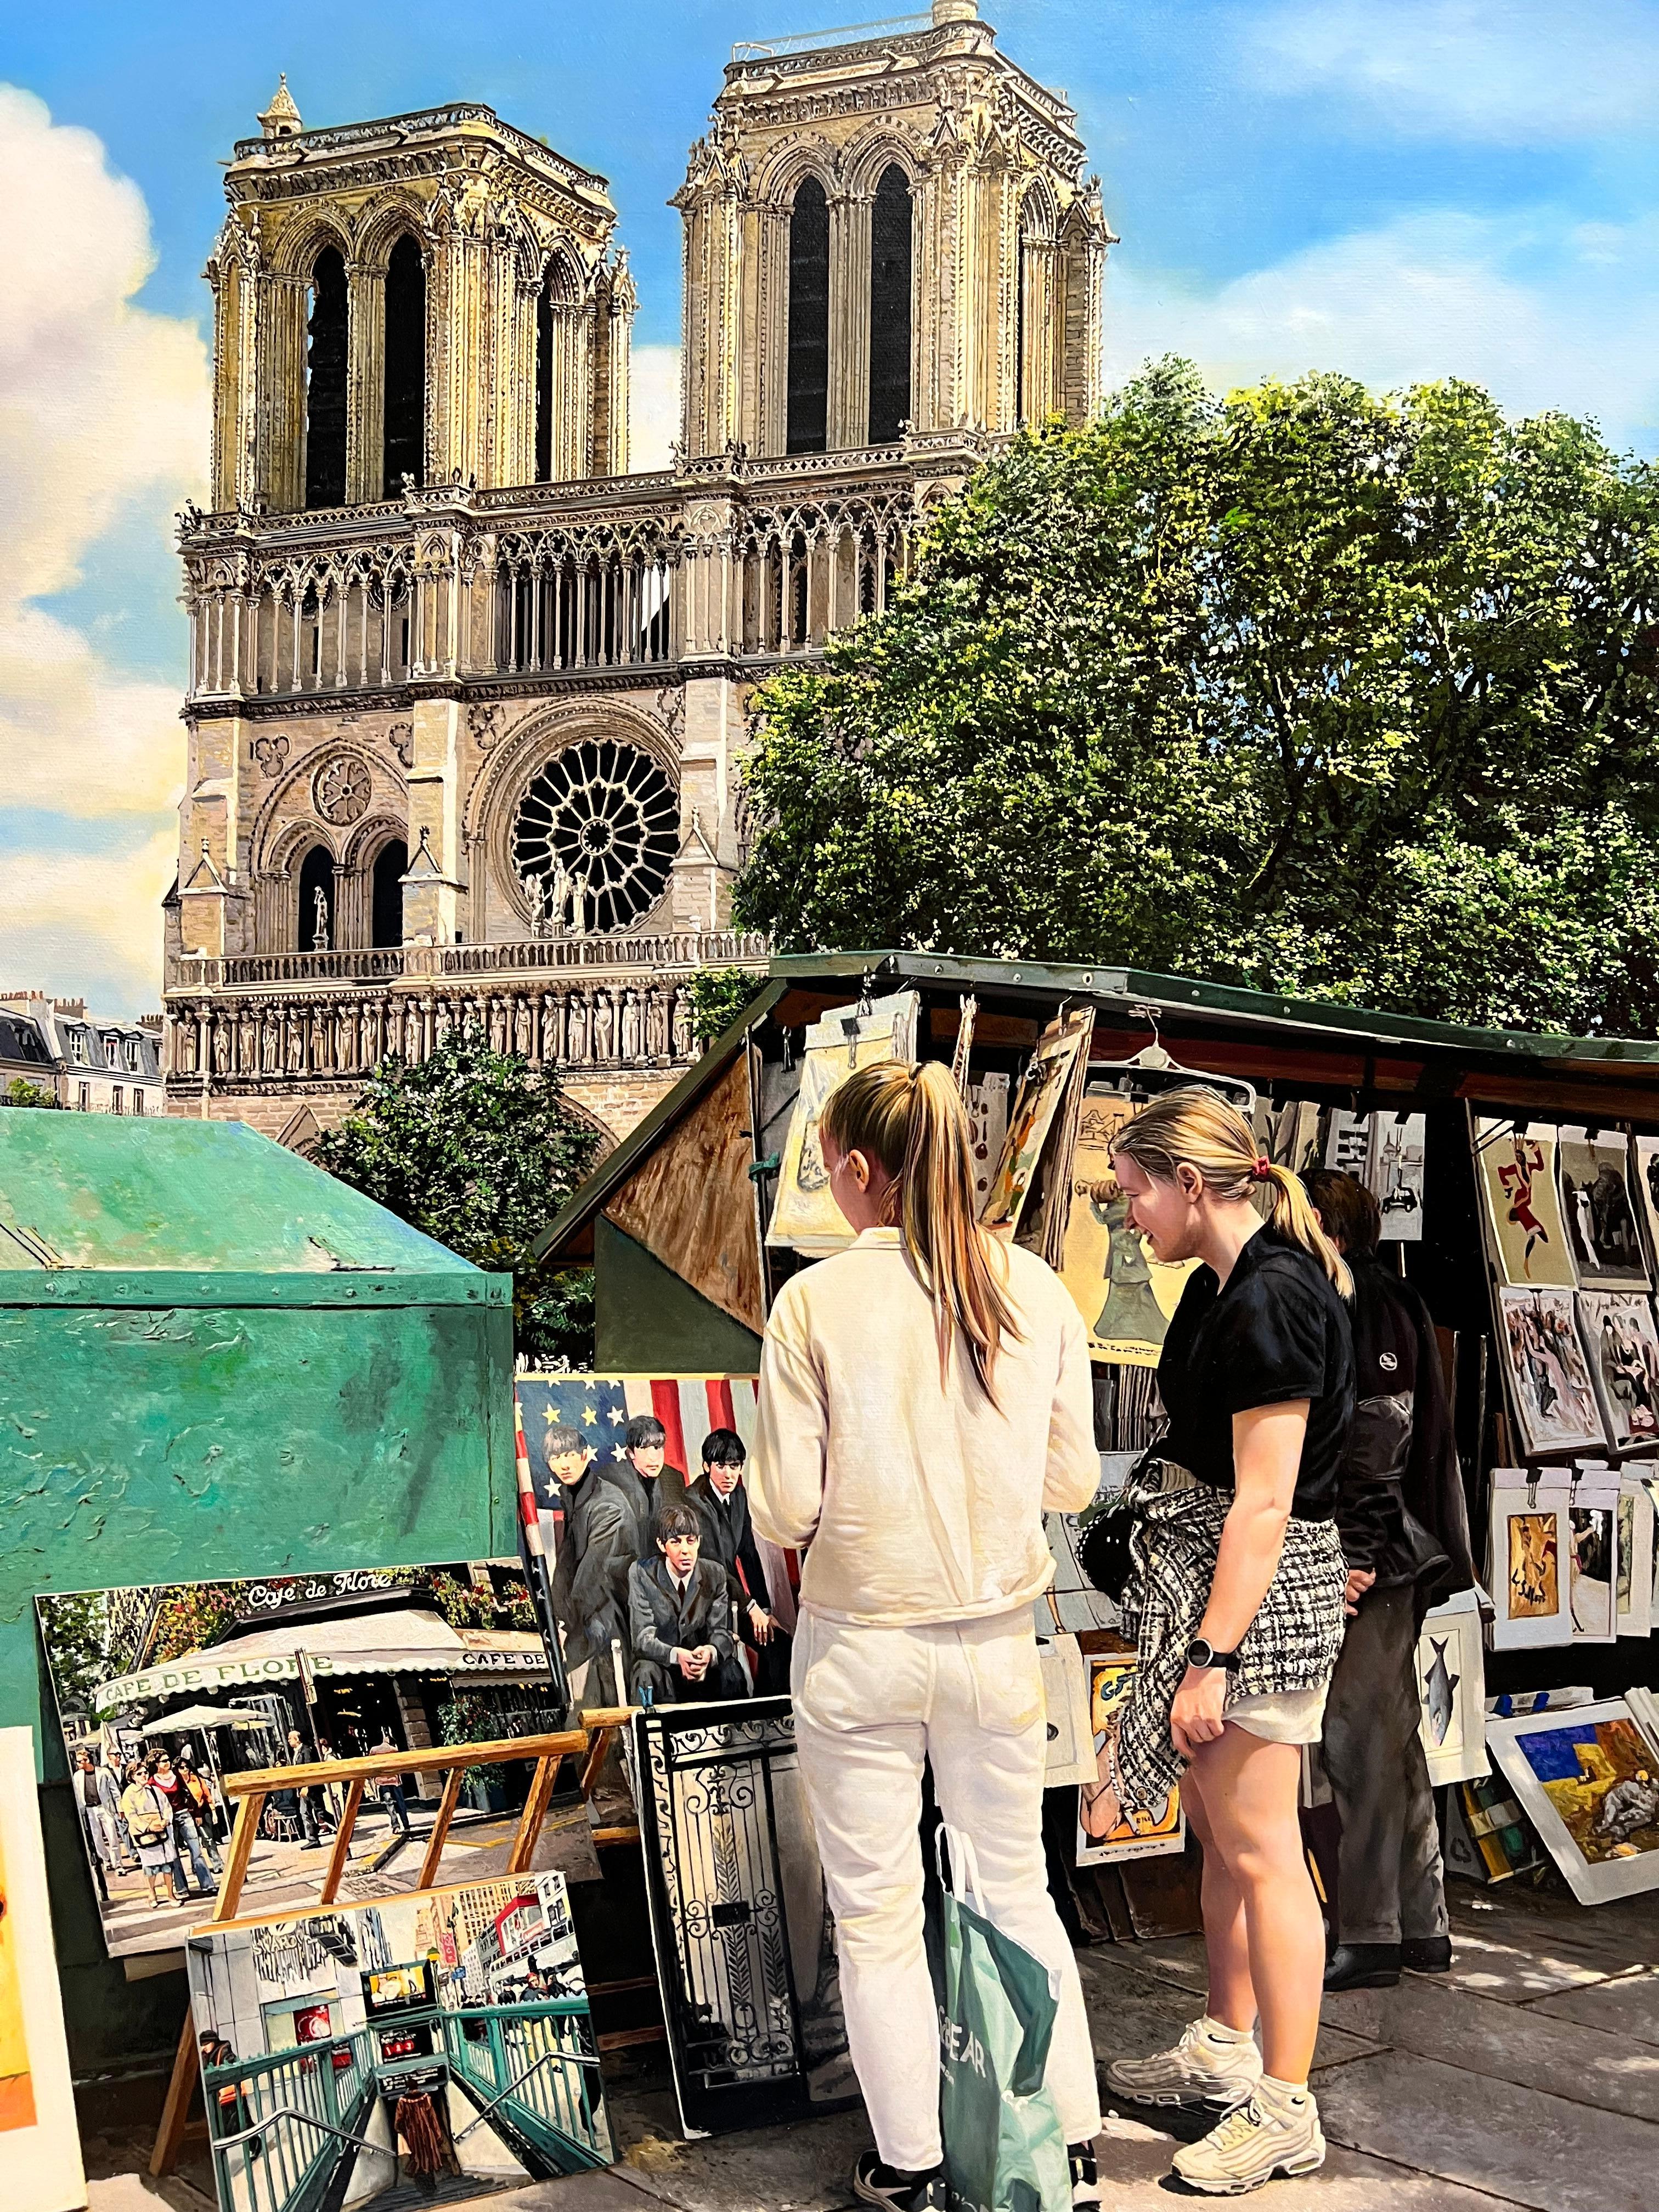 Notre Dame, Paris - Photorealist Painting by Jesus Navarro